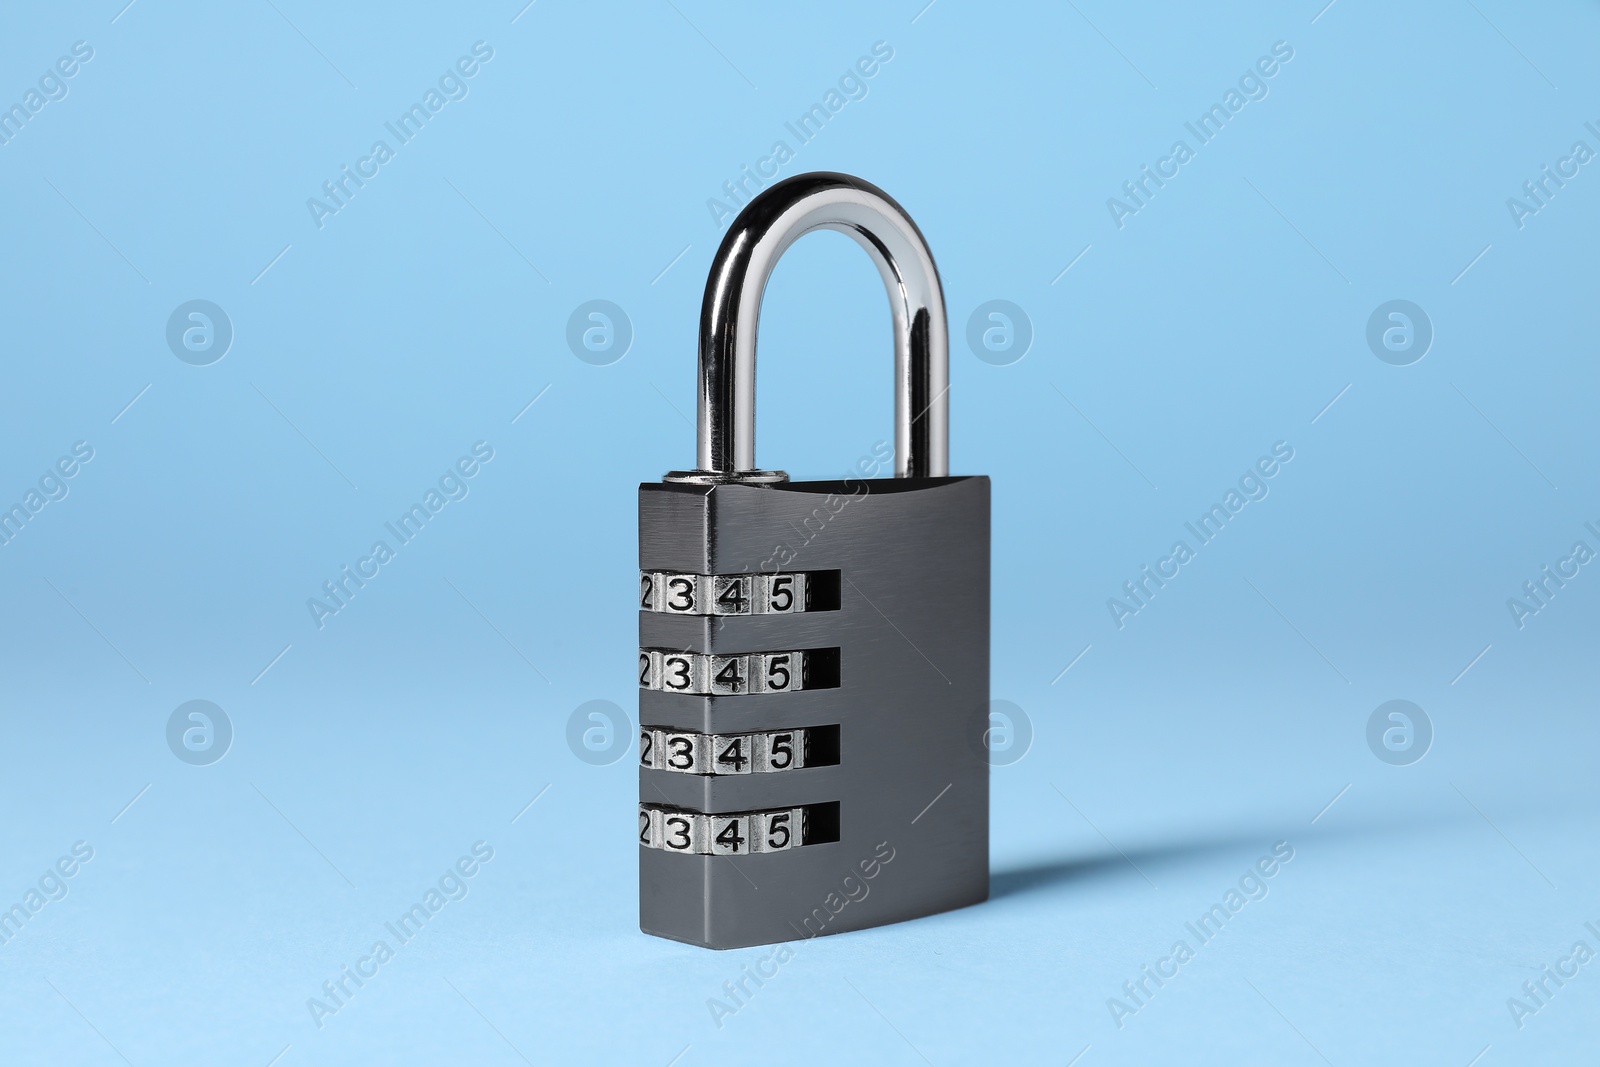 Photo of Steel combination padlock on light blue background